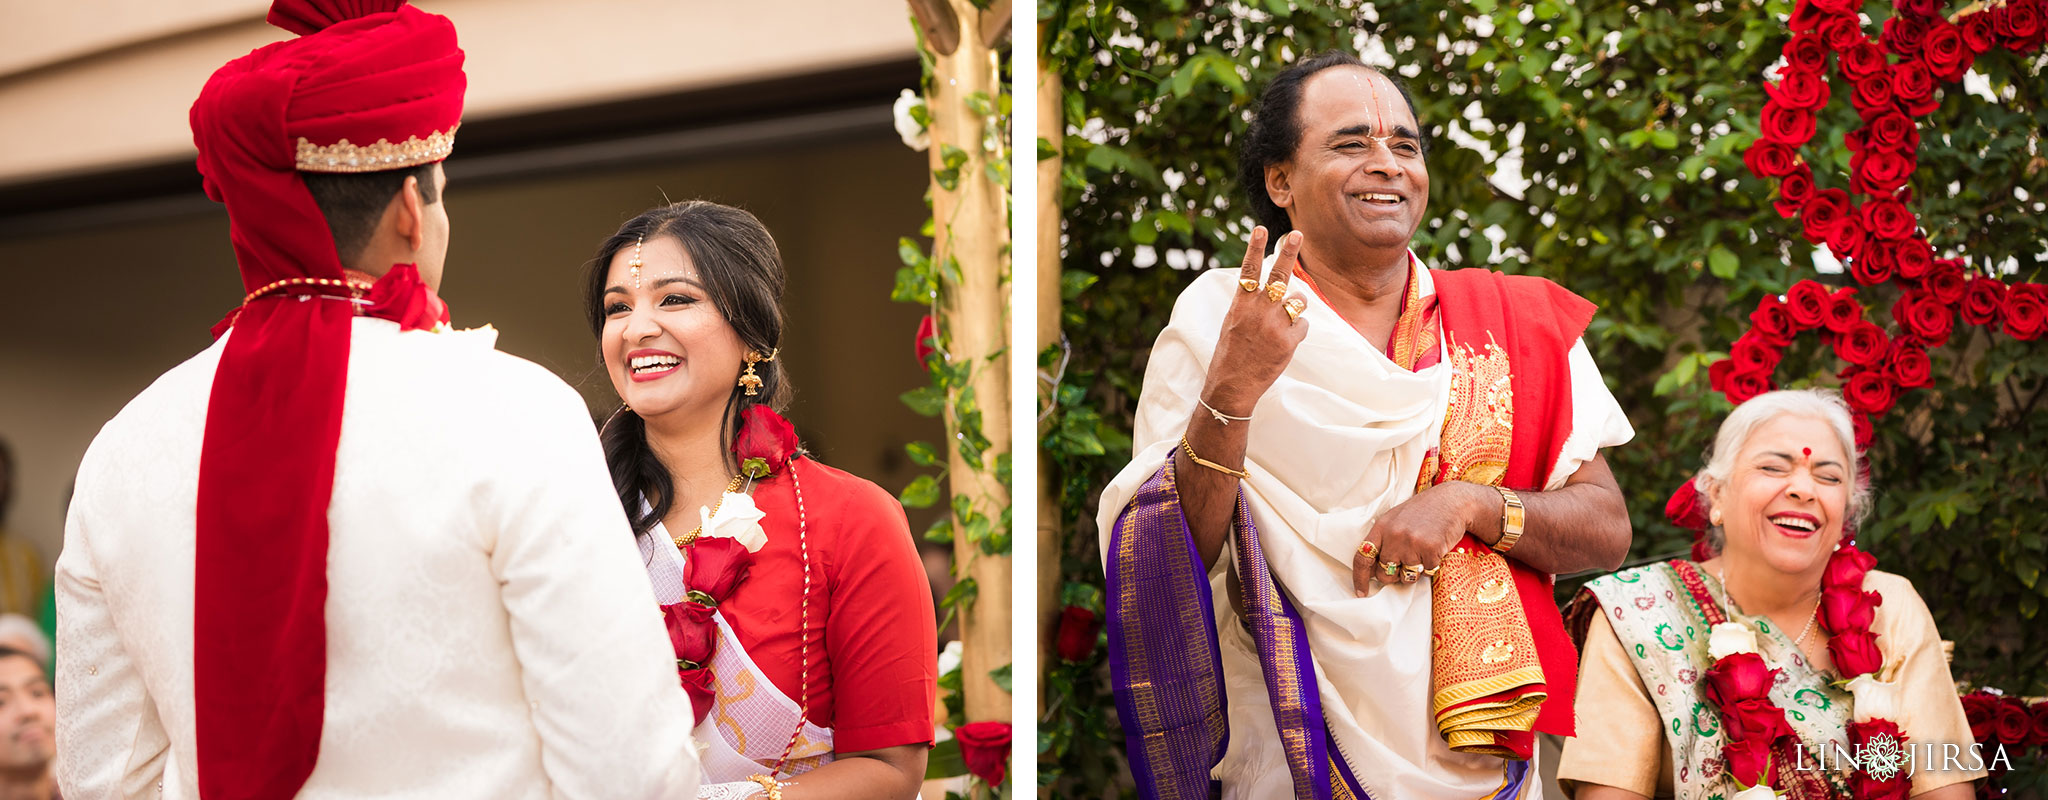 42 Orange County Indian Wedding Photography